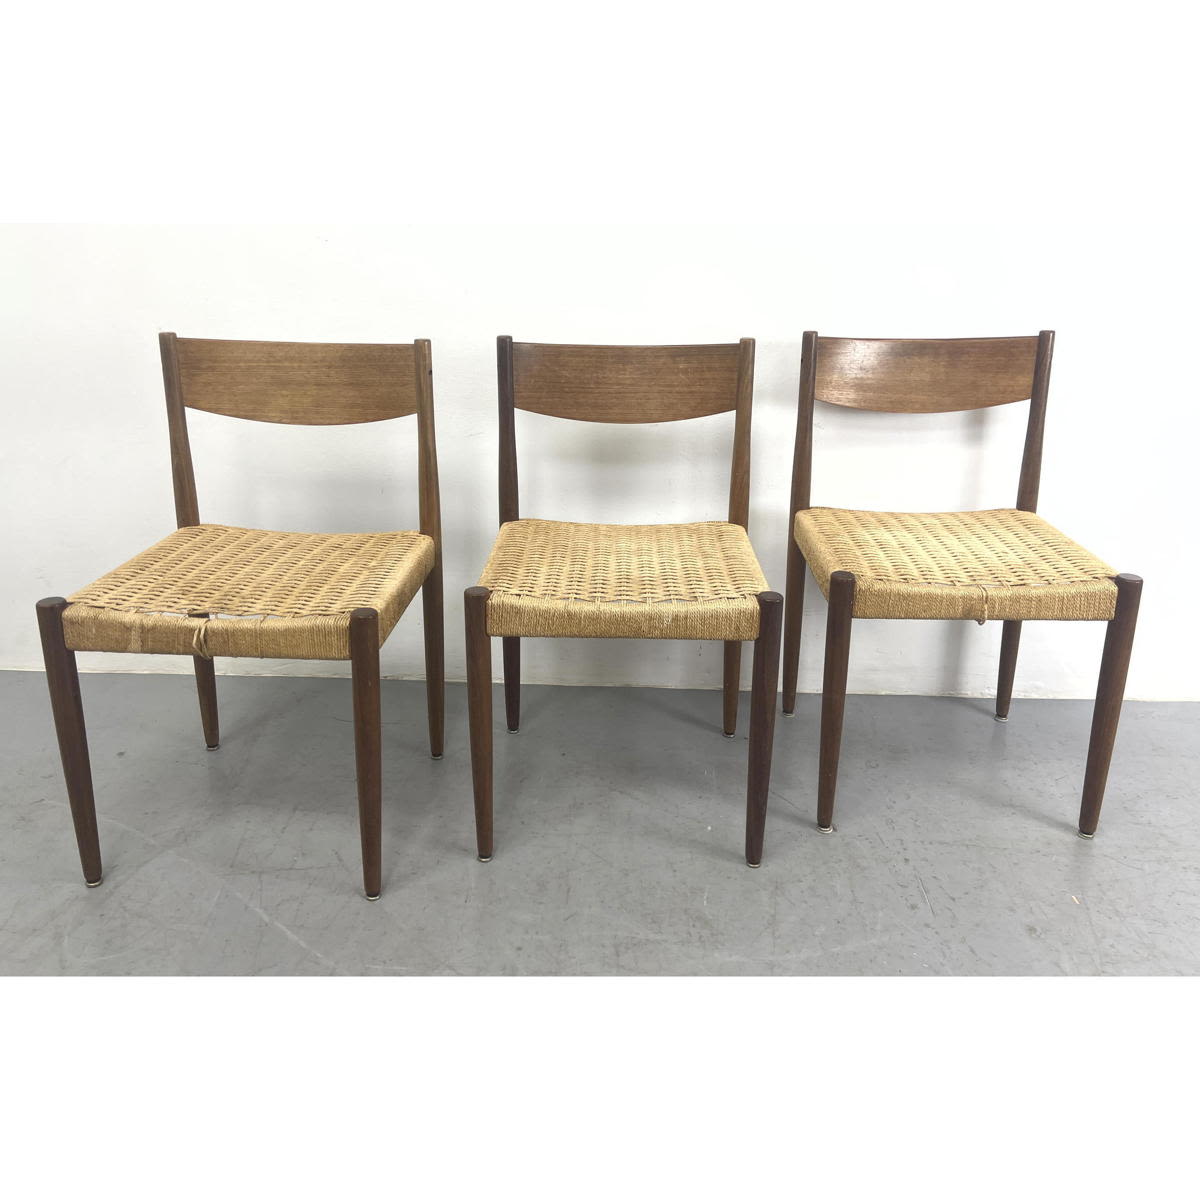 3pc Danish Modern Teak Dining Chairs.